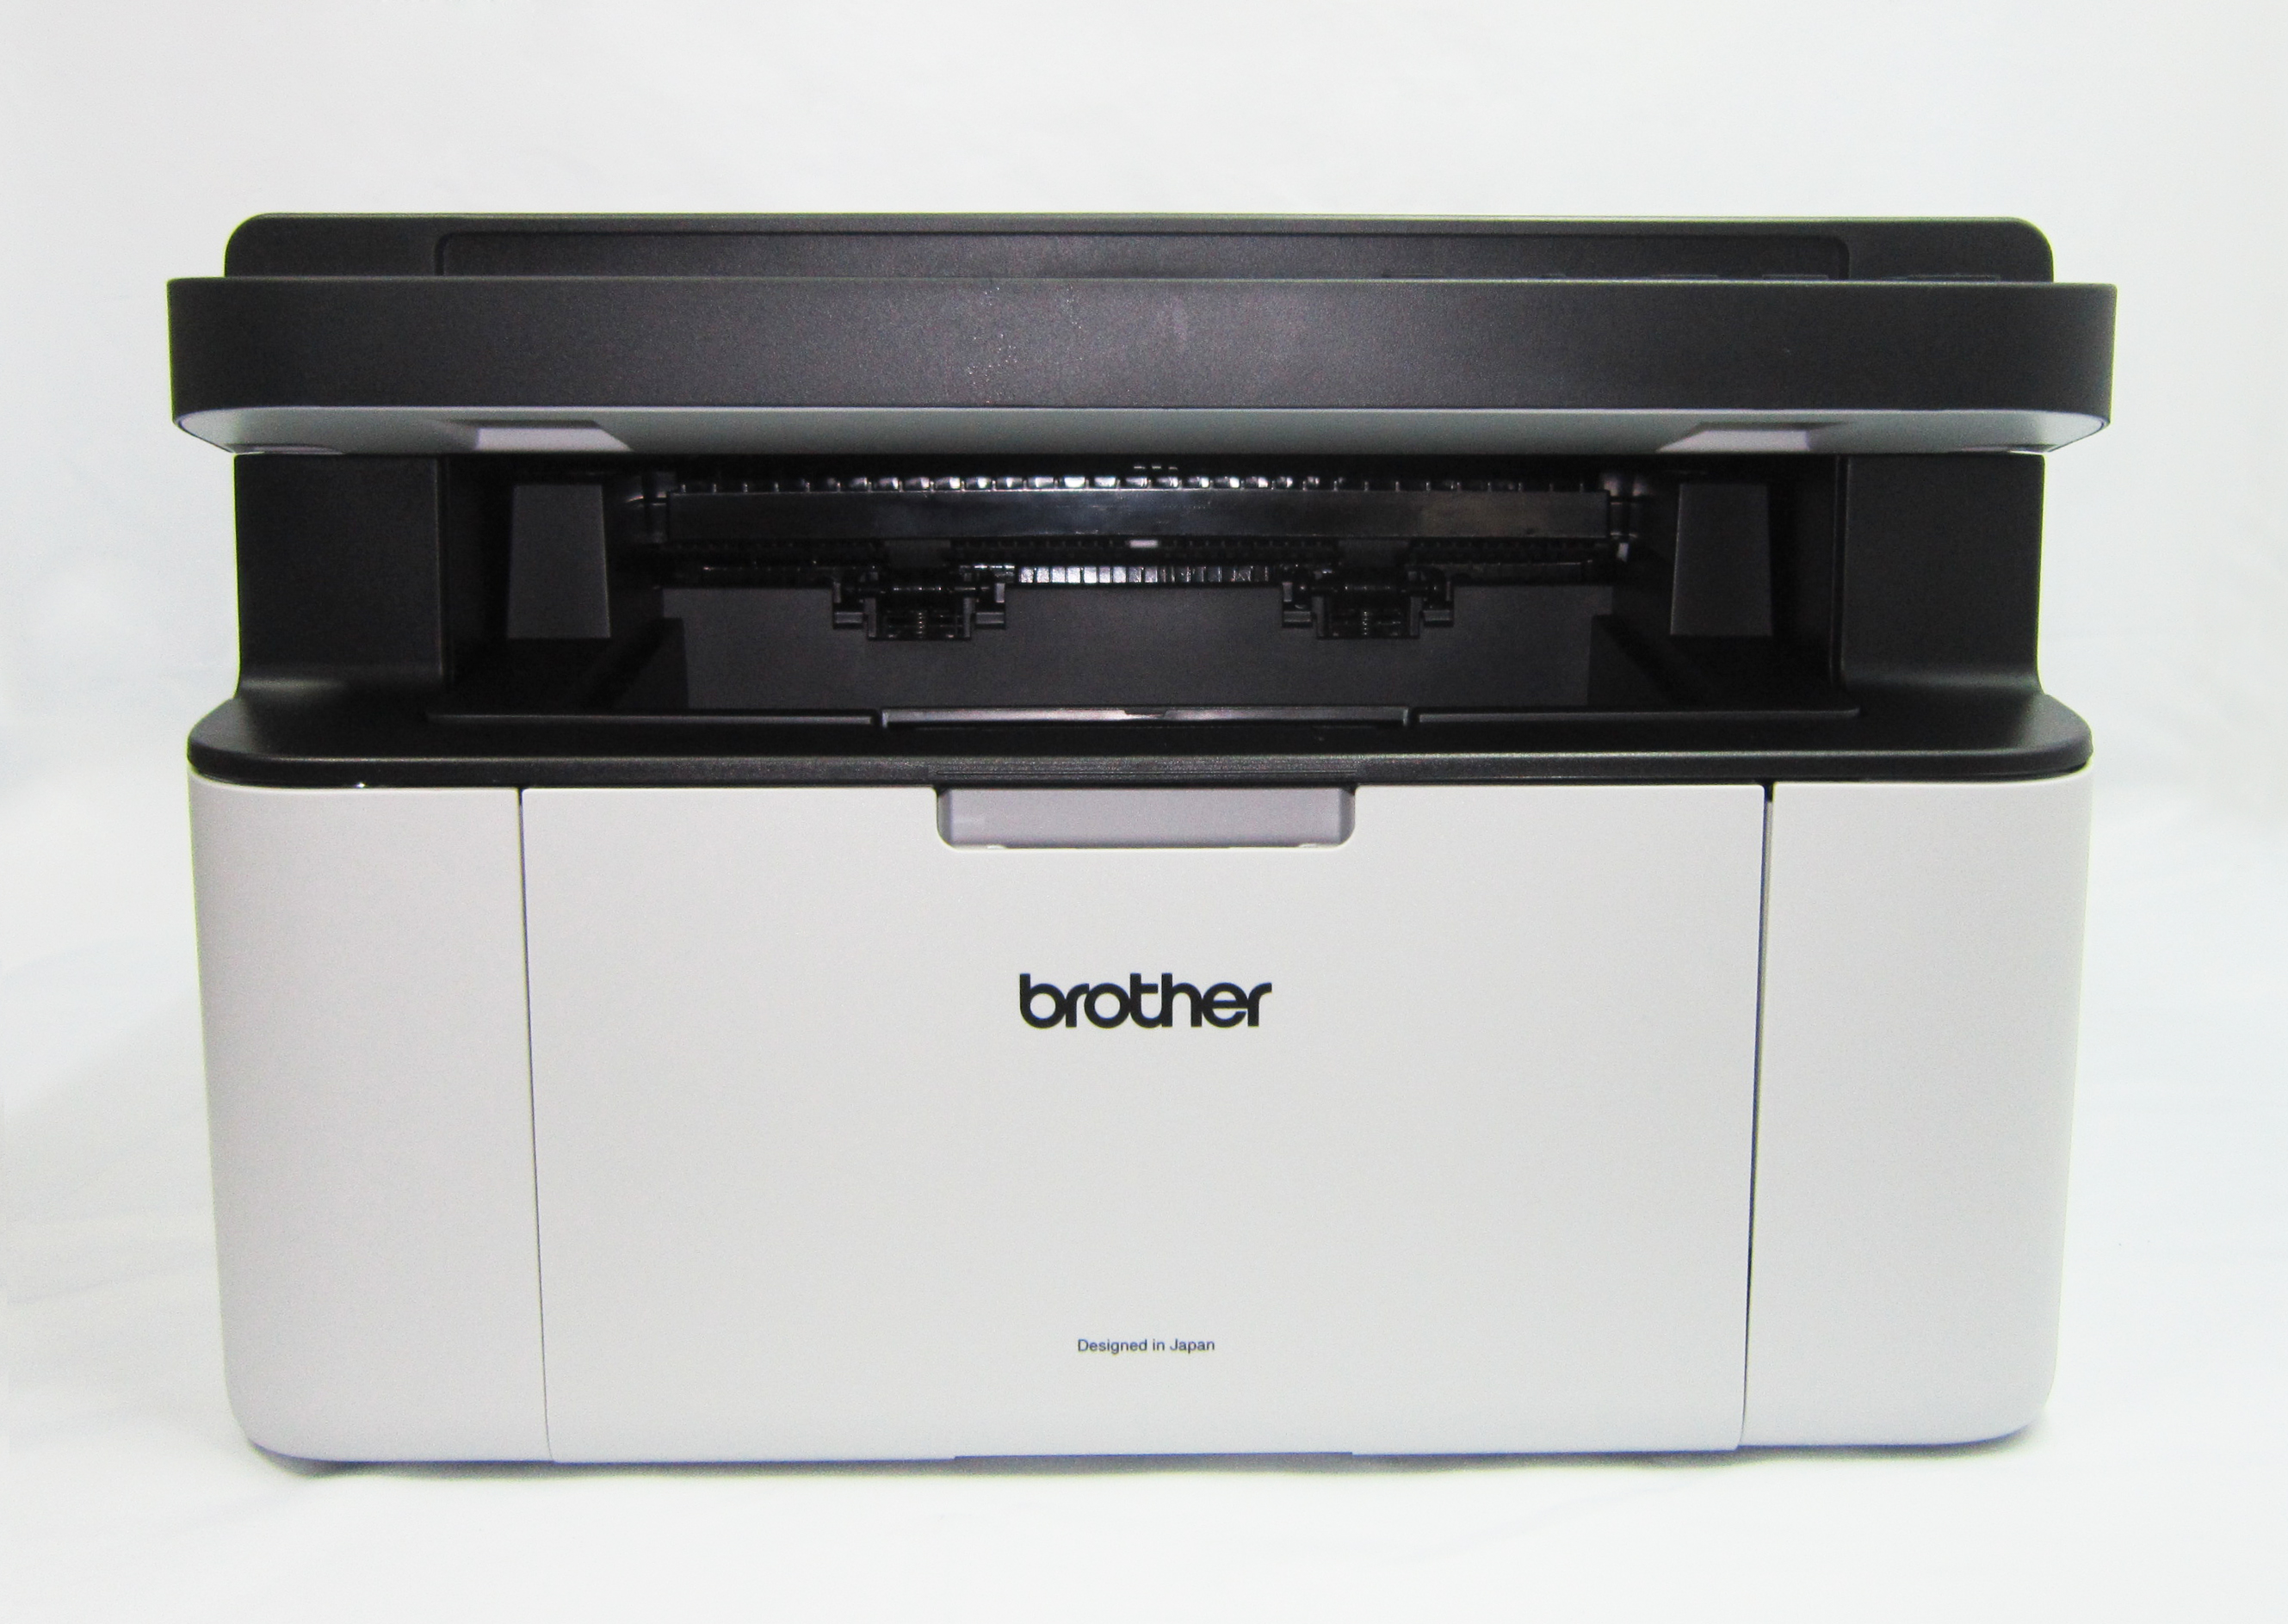 Brother 1510r картридж. Принтер бротхер 1510. МФУ лазерное brother DCP-1510r "3 в 1". Brother DC 1510. DCP-1510r картридж.